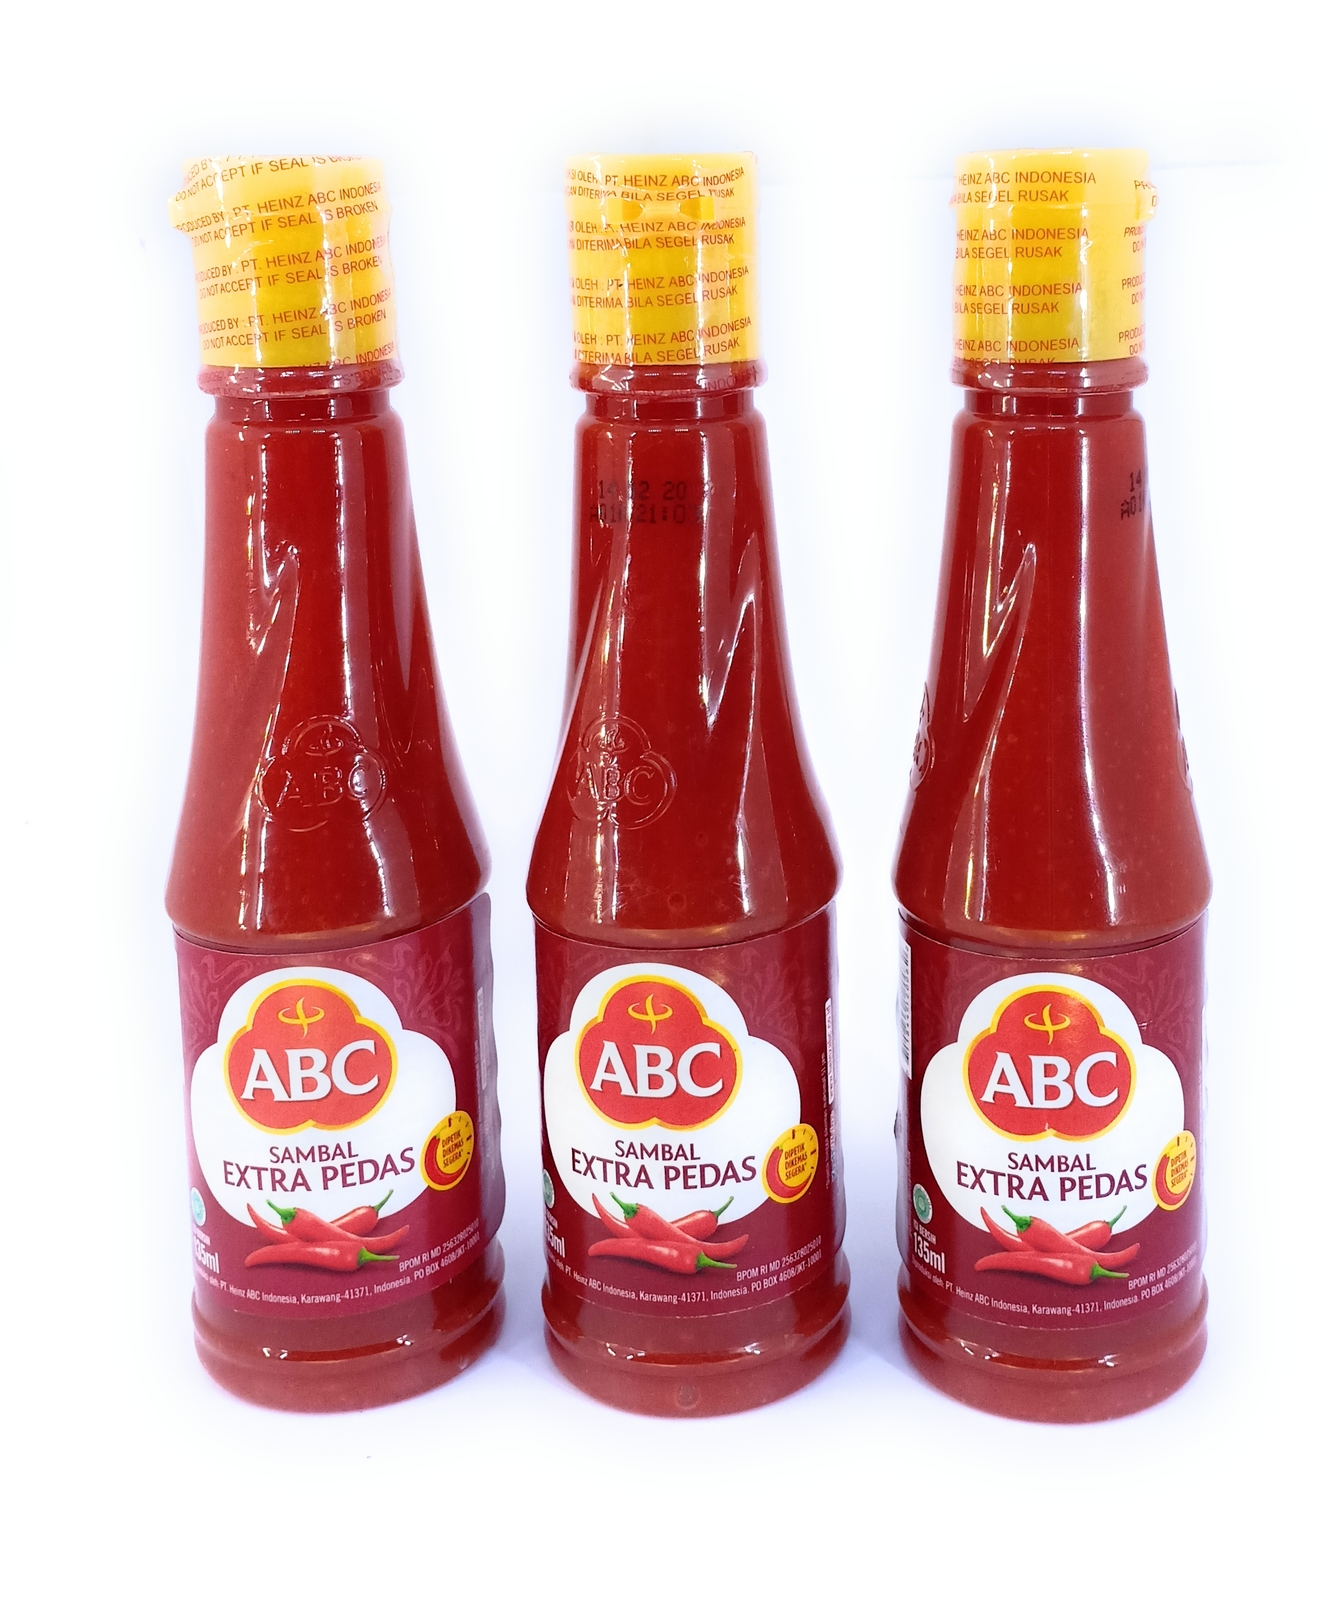 Primary image for Heinz ABC Sambal Ekstra Pedas - Extra Hot Sauce, 135 Ml (3 bottles)